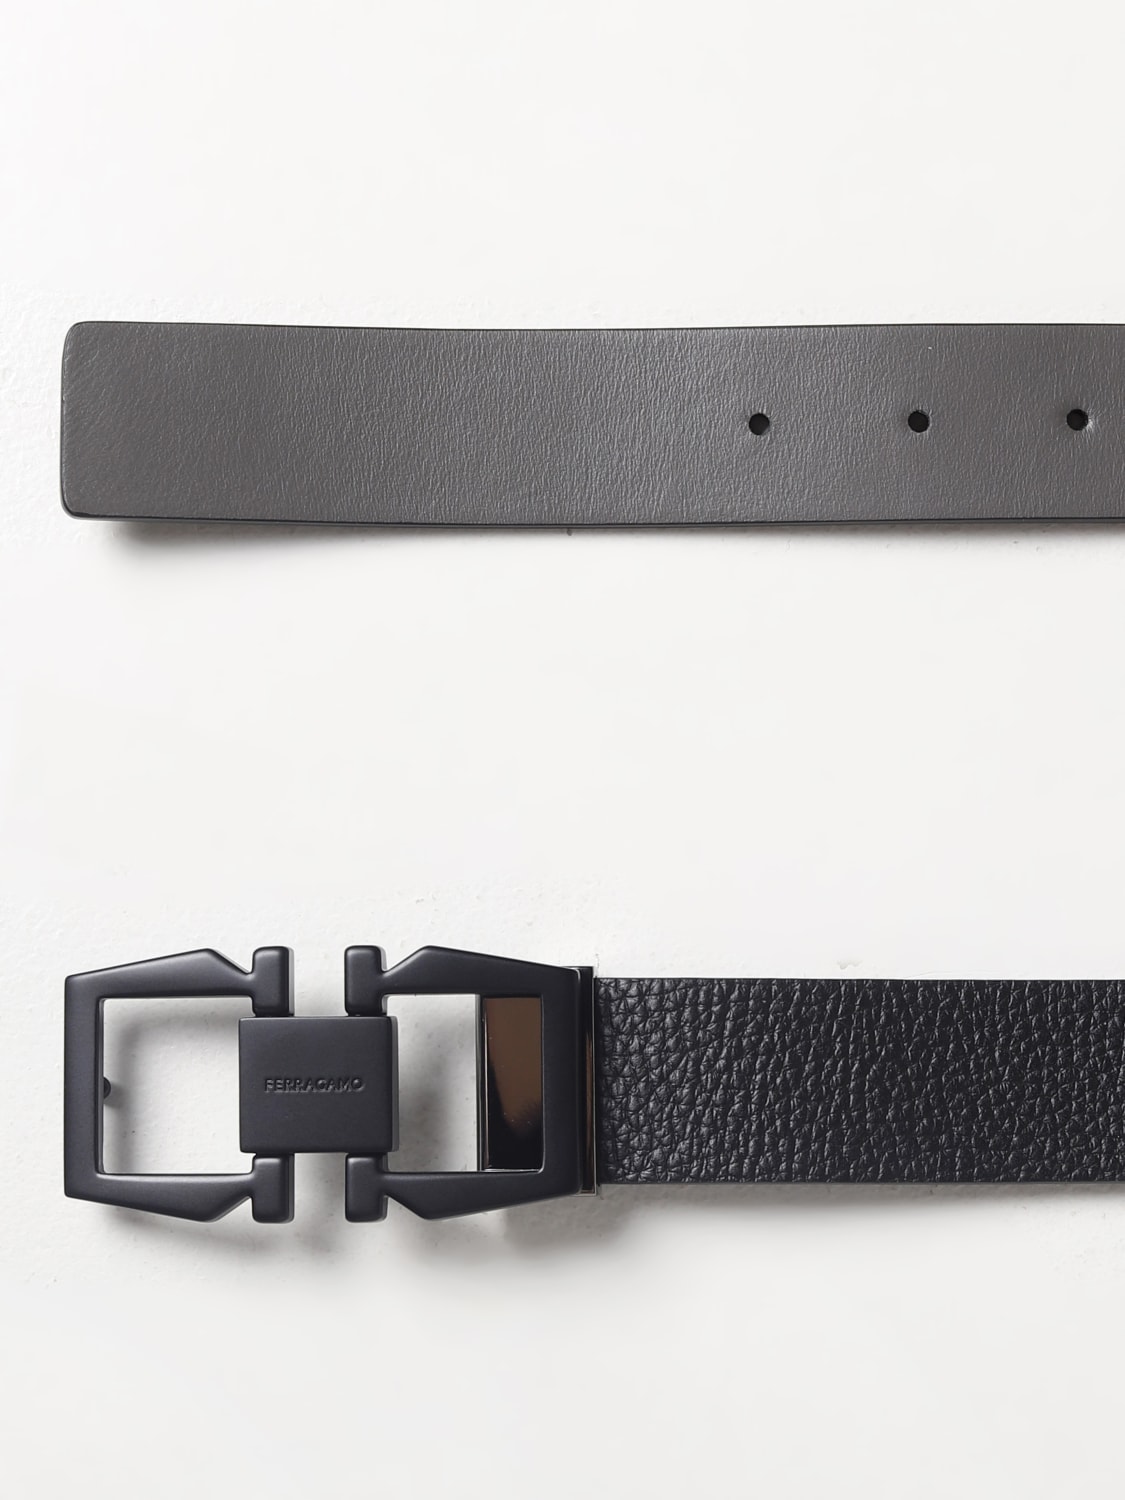 Salvatore Ferragamo Men's Black Buckle Reversible Leather Belt